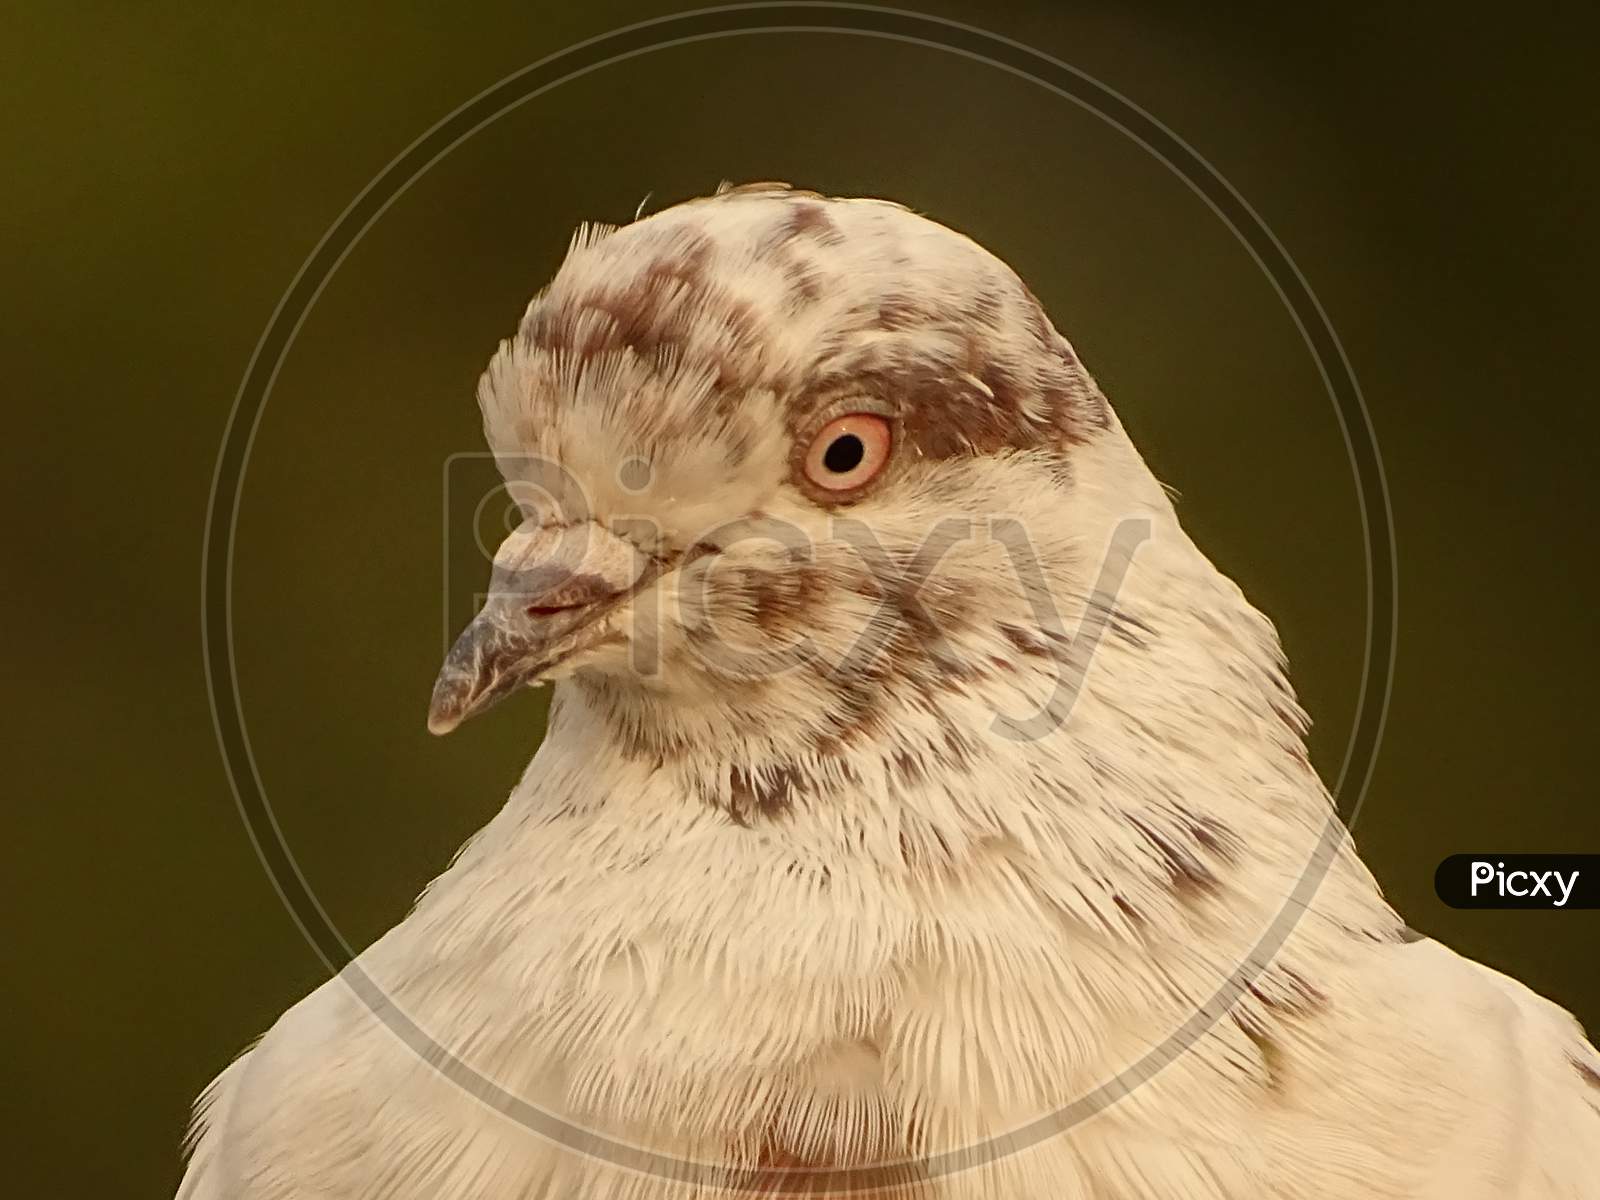 a domestic pigeon close-up shot